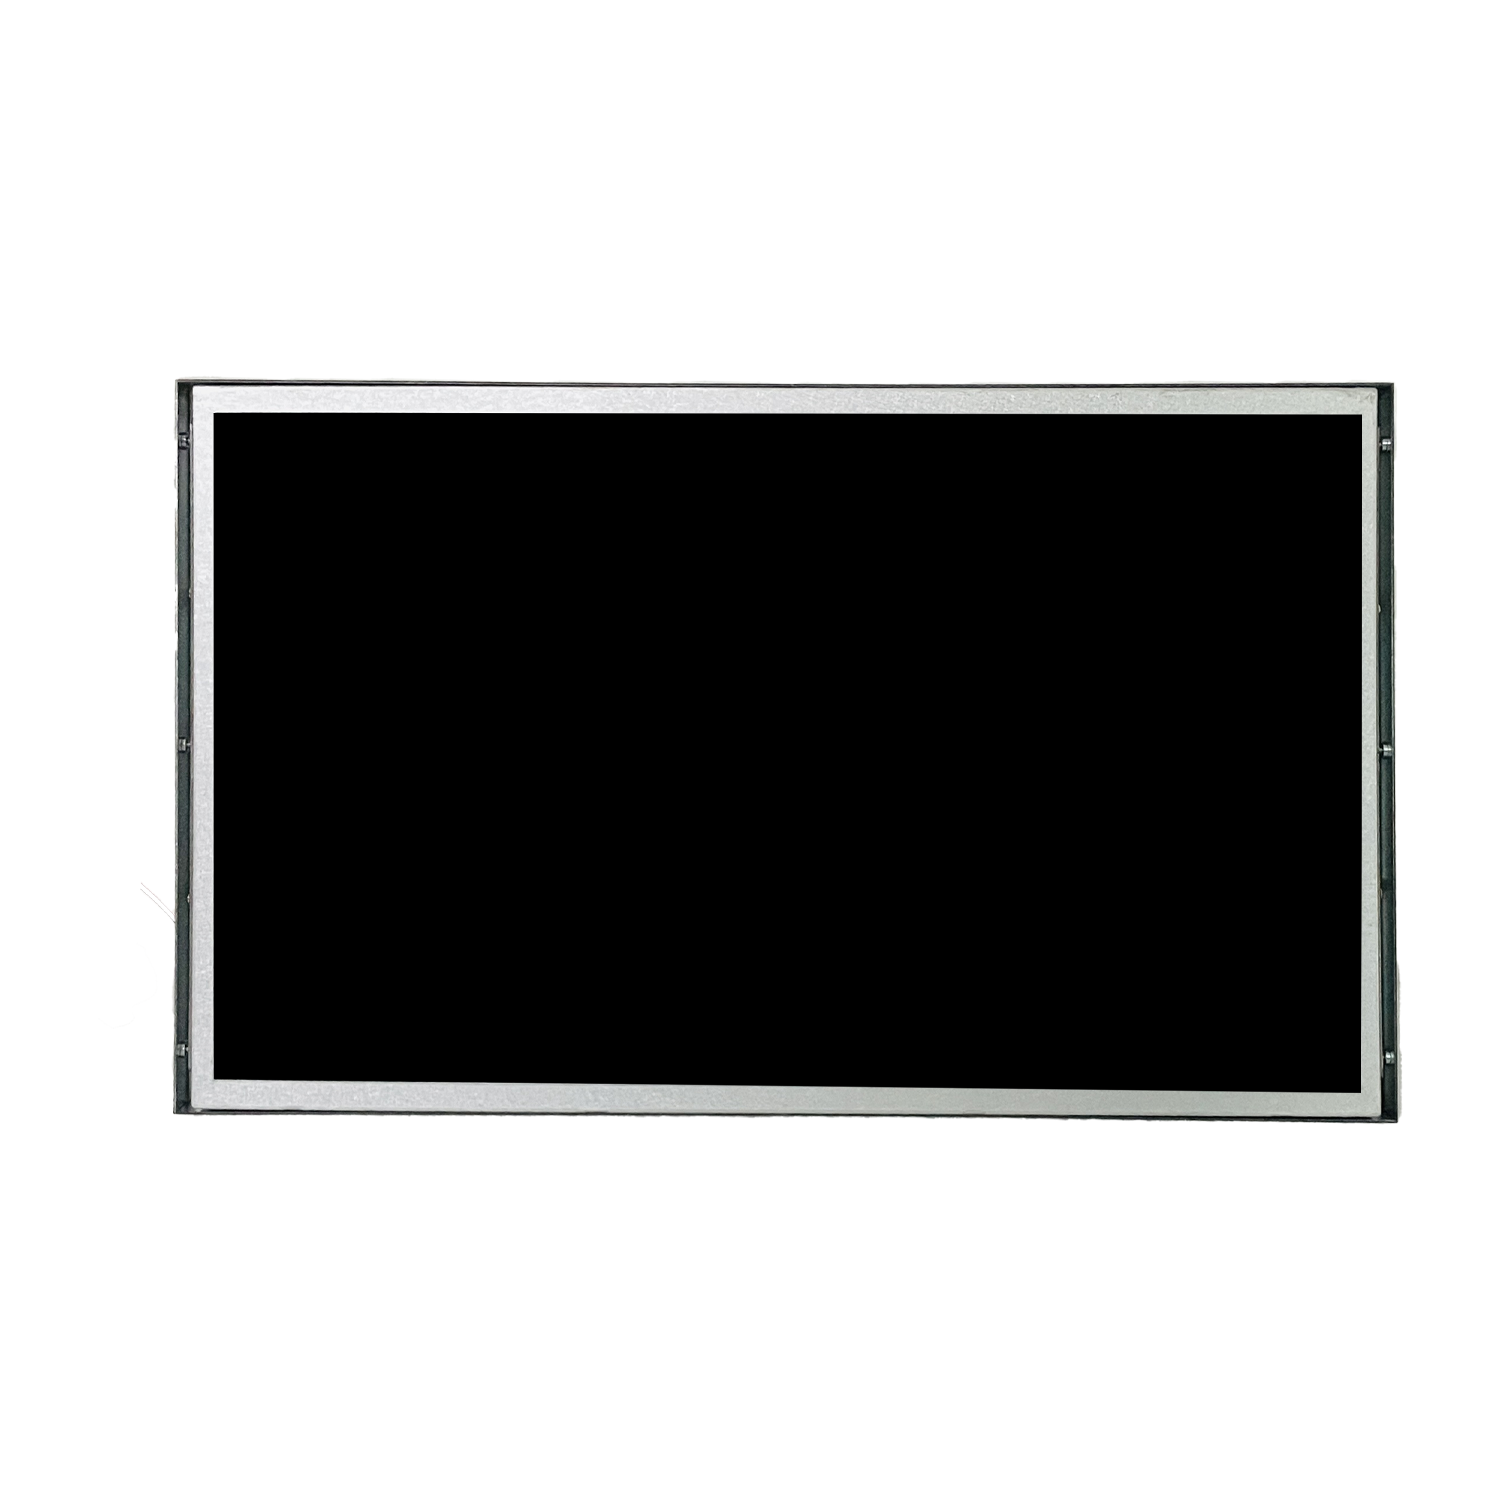 24 inch open frame touch screen monitor for E banking kiosk